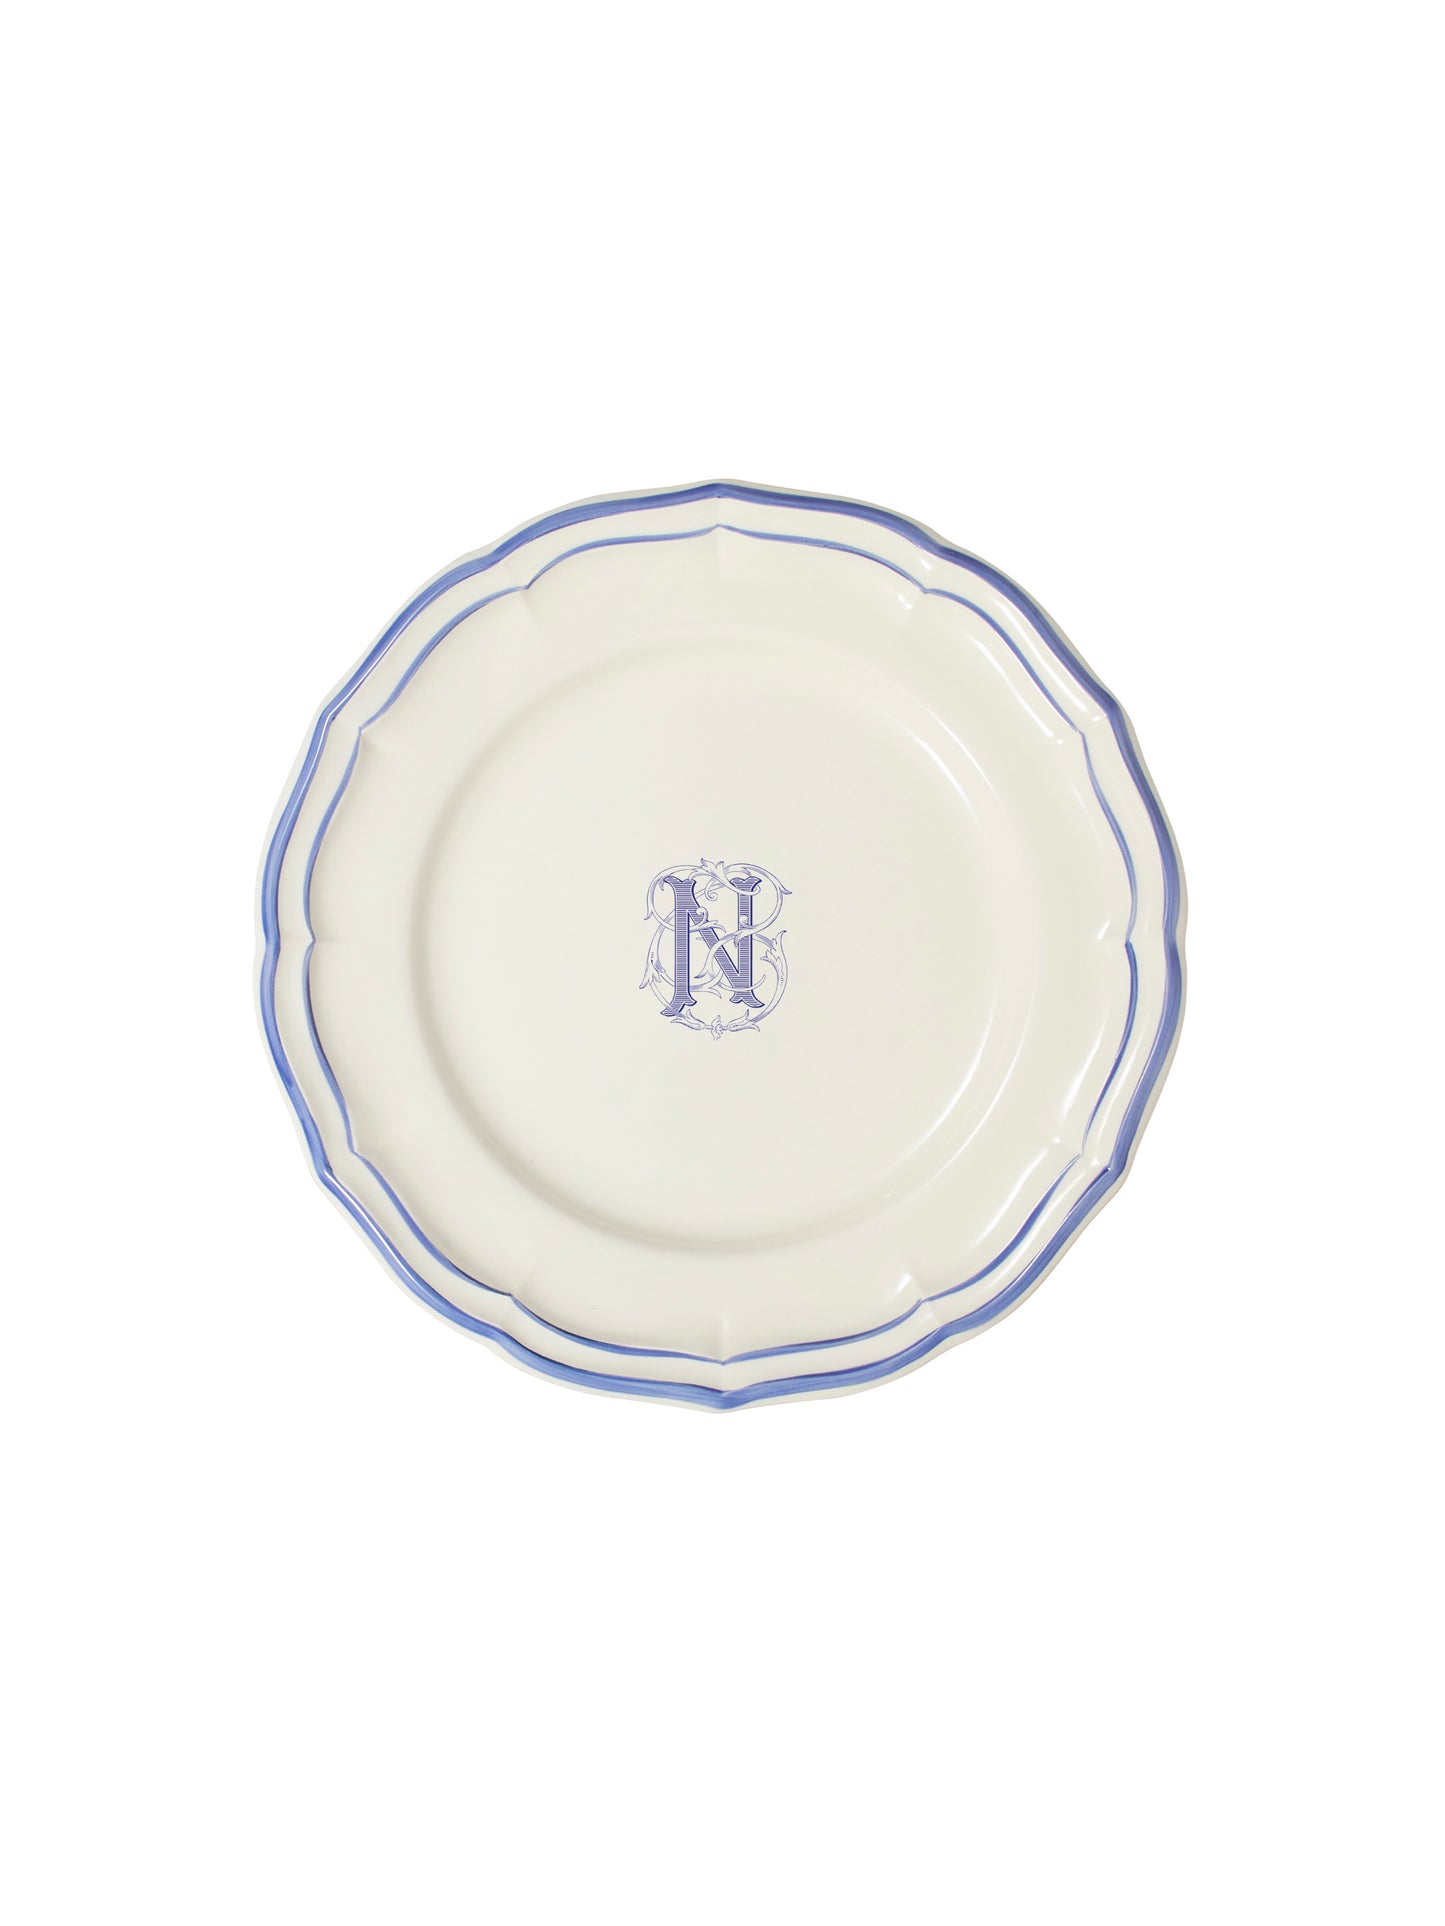 Gien Filet Bleu Monogram Salad Plate N Weston Table